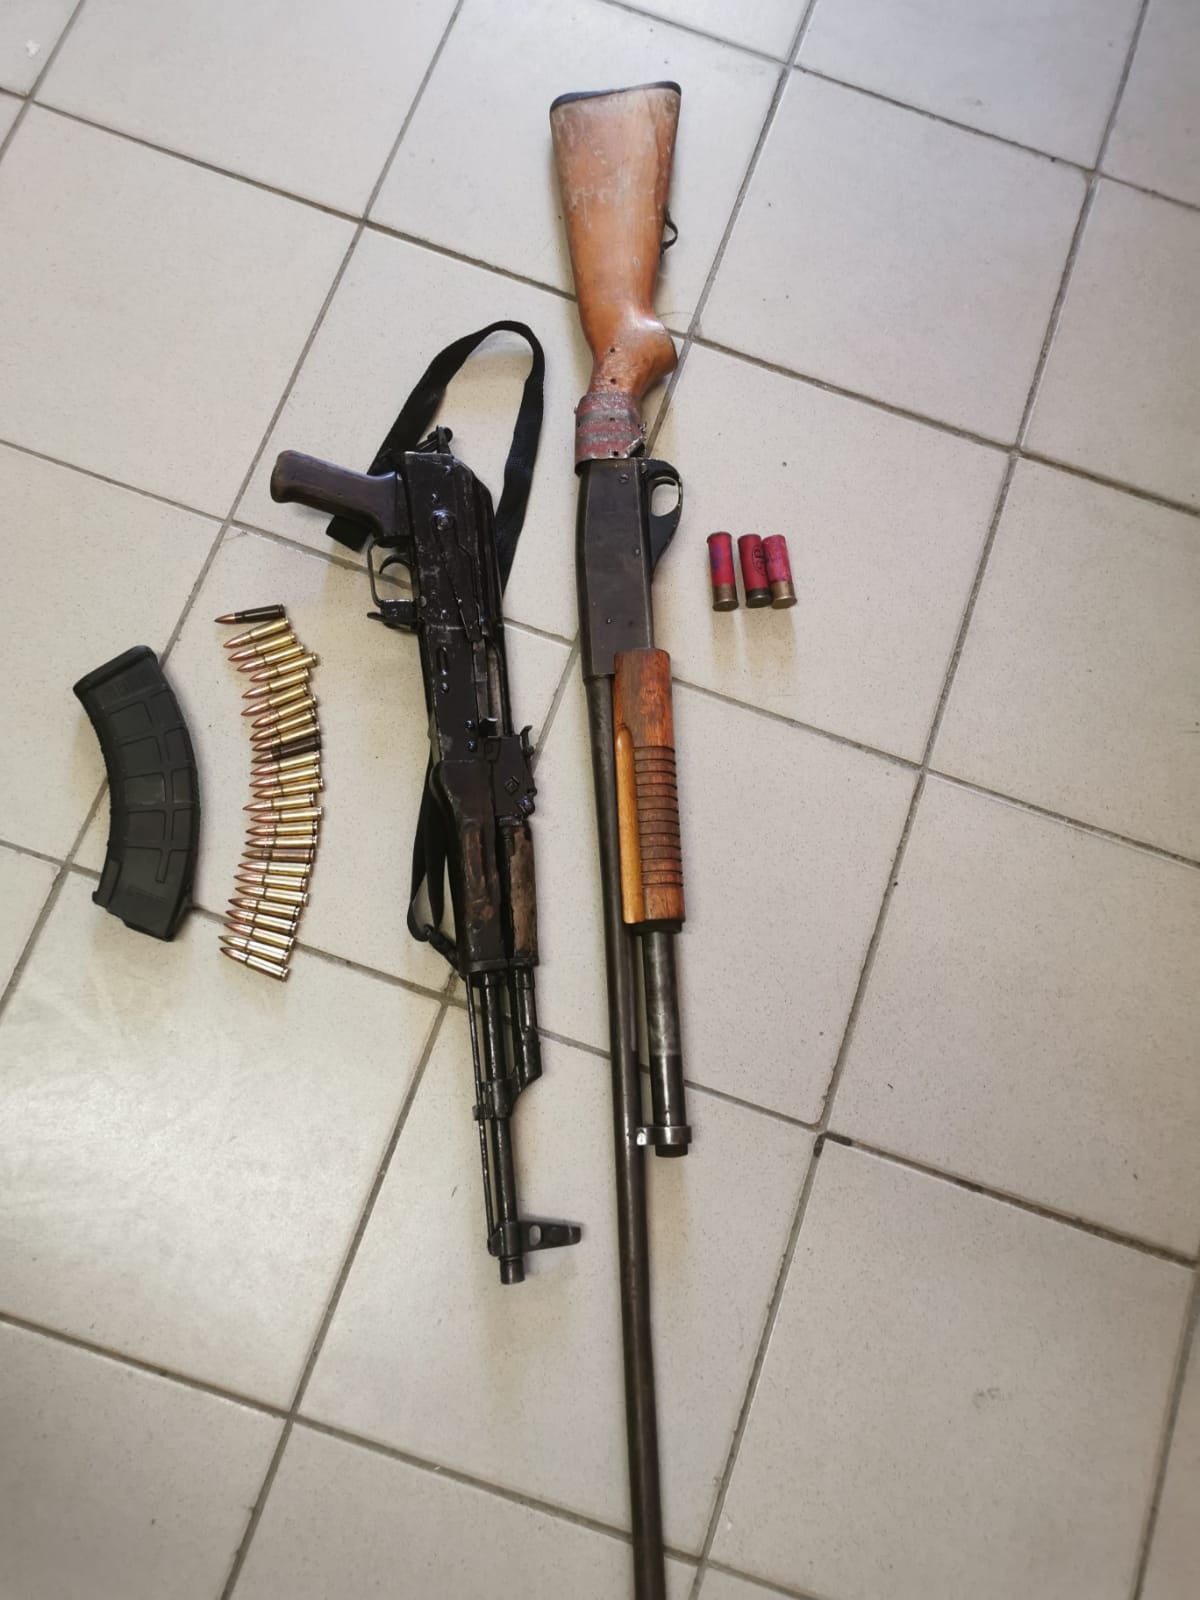 Three firearms seized in Weenen, suspect in court